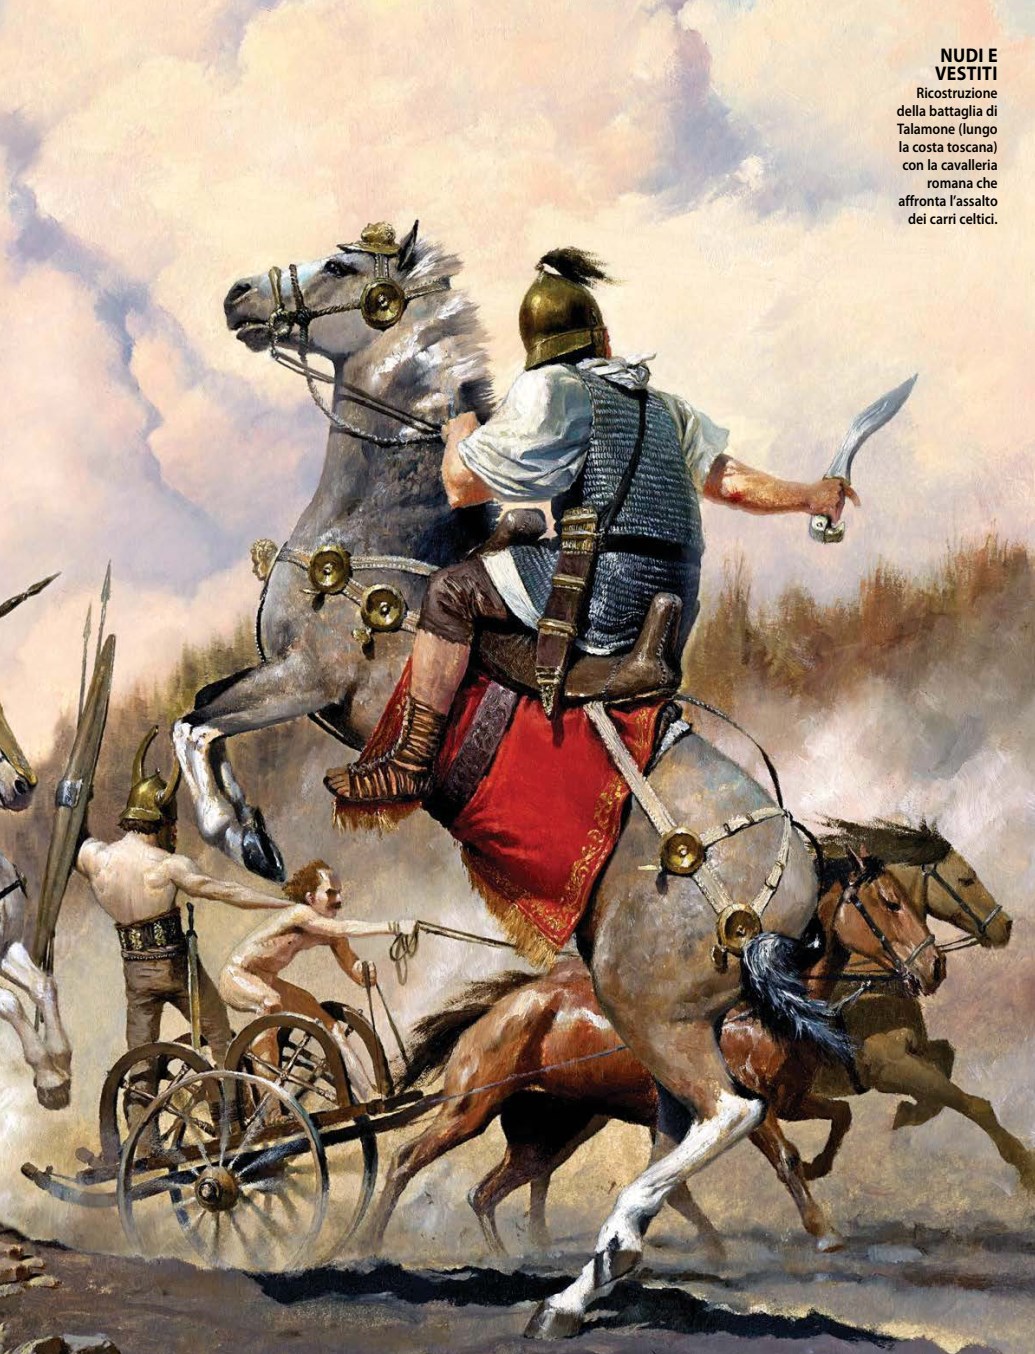 Battle of Telamon 225 BC